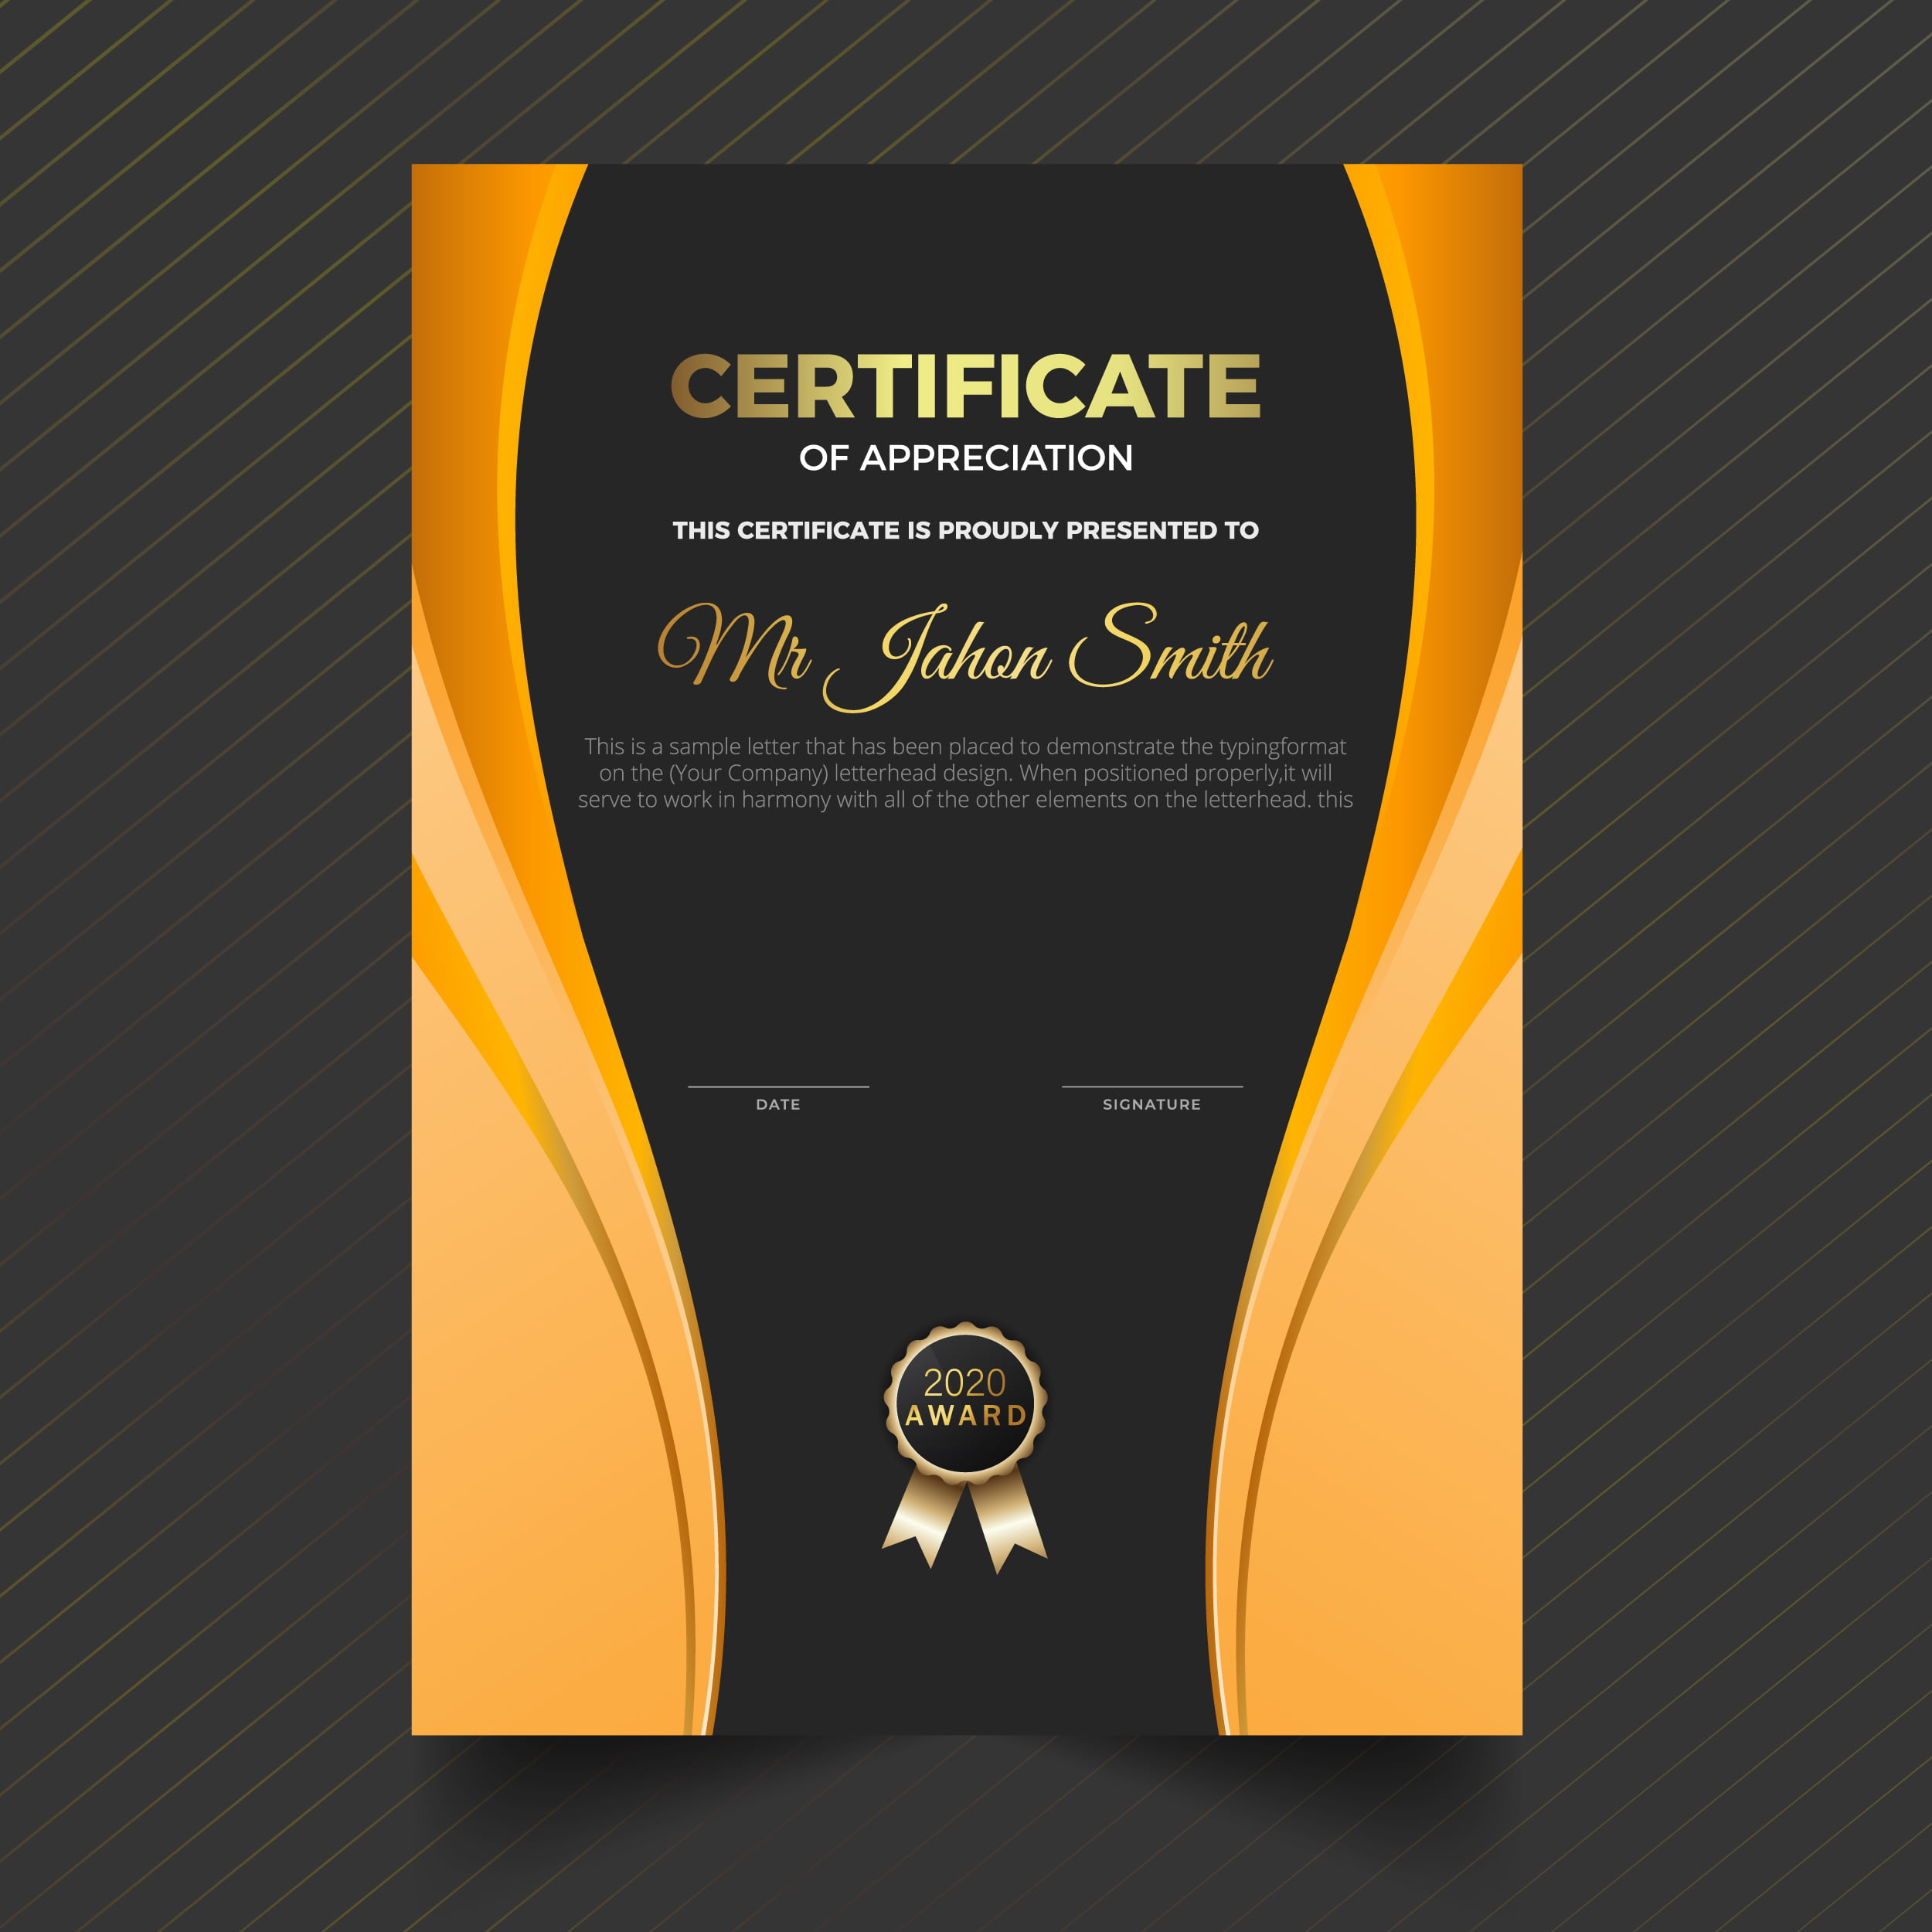 certificate of appreciation template for guest speaker